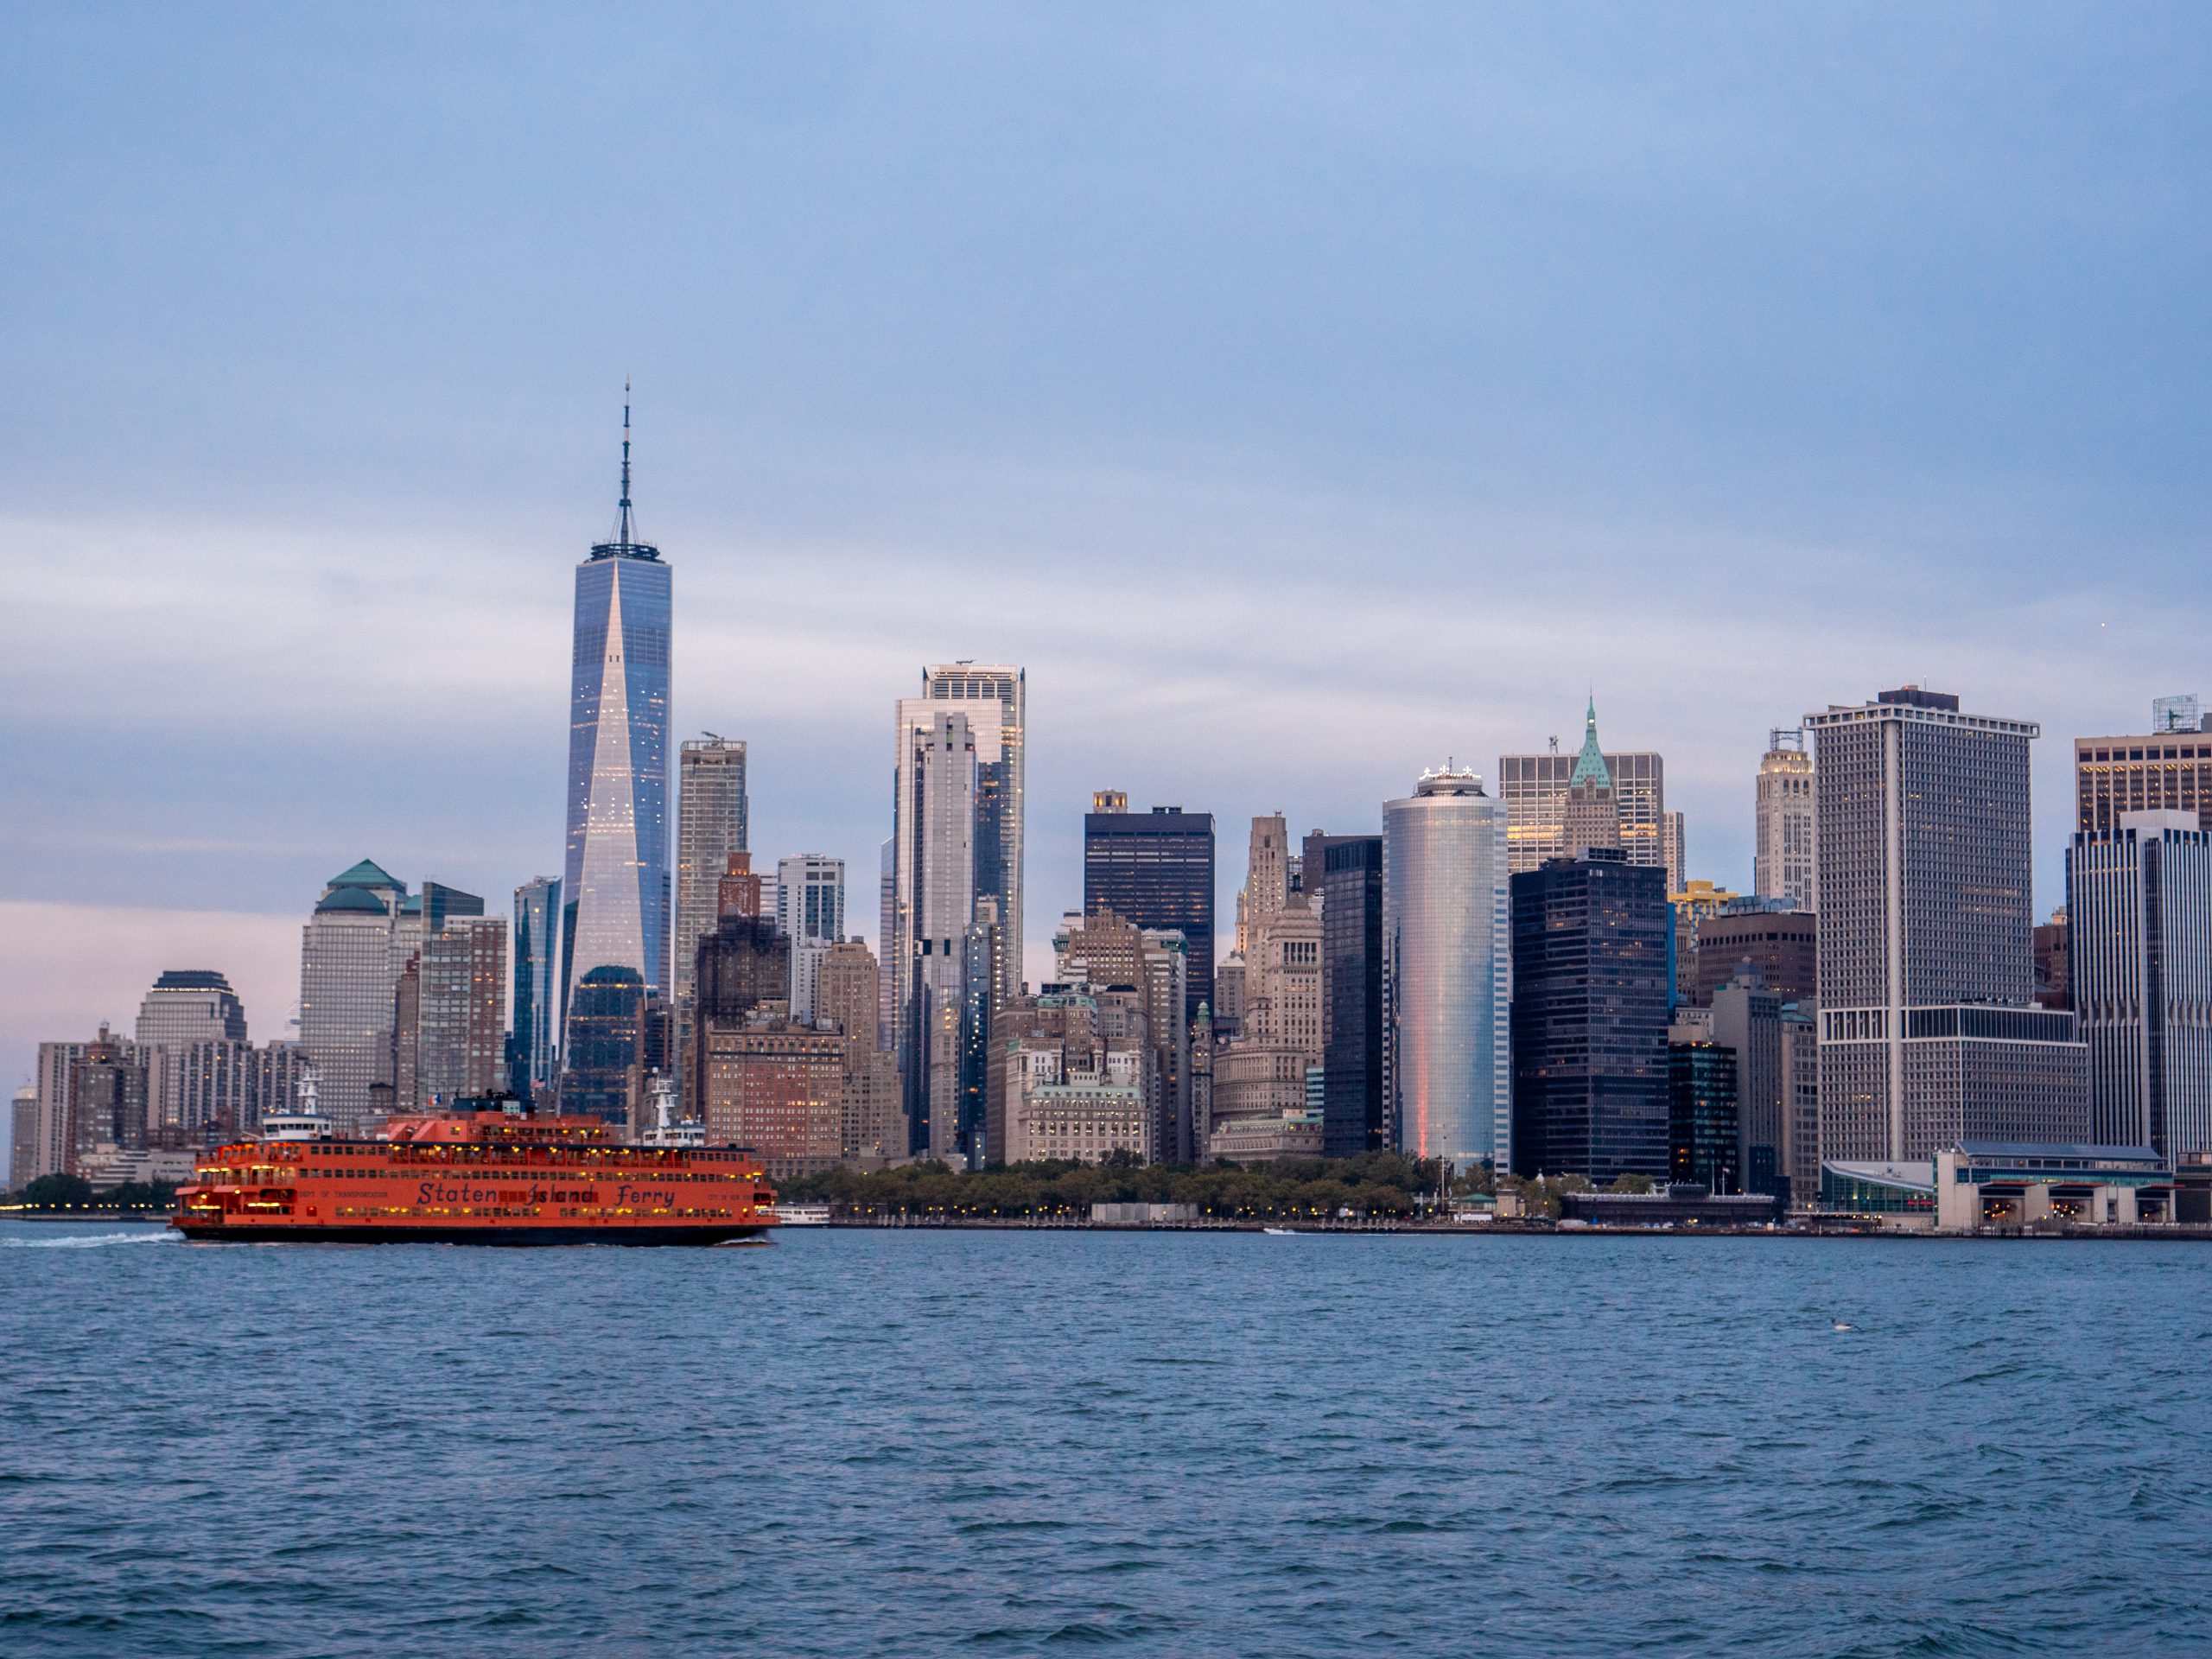 The orange Staten Island ferry departs from Manhattan. Photo by Sarah Funk.